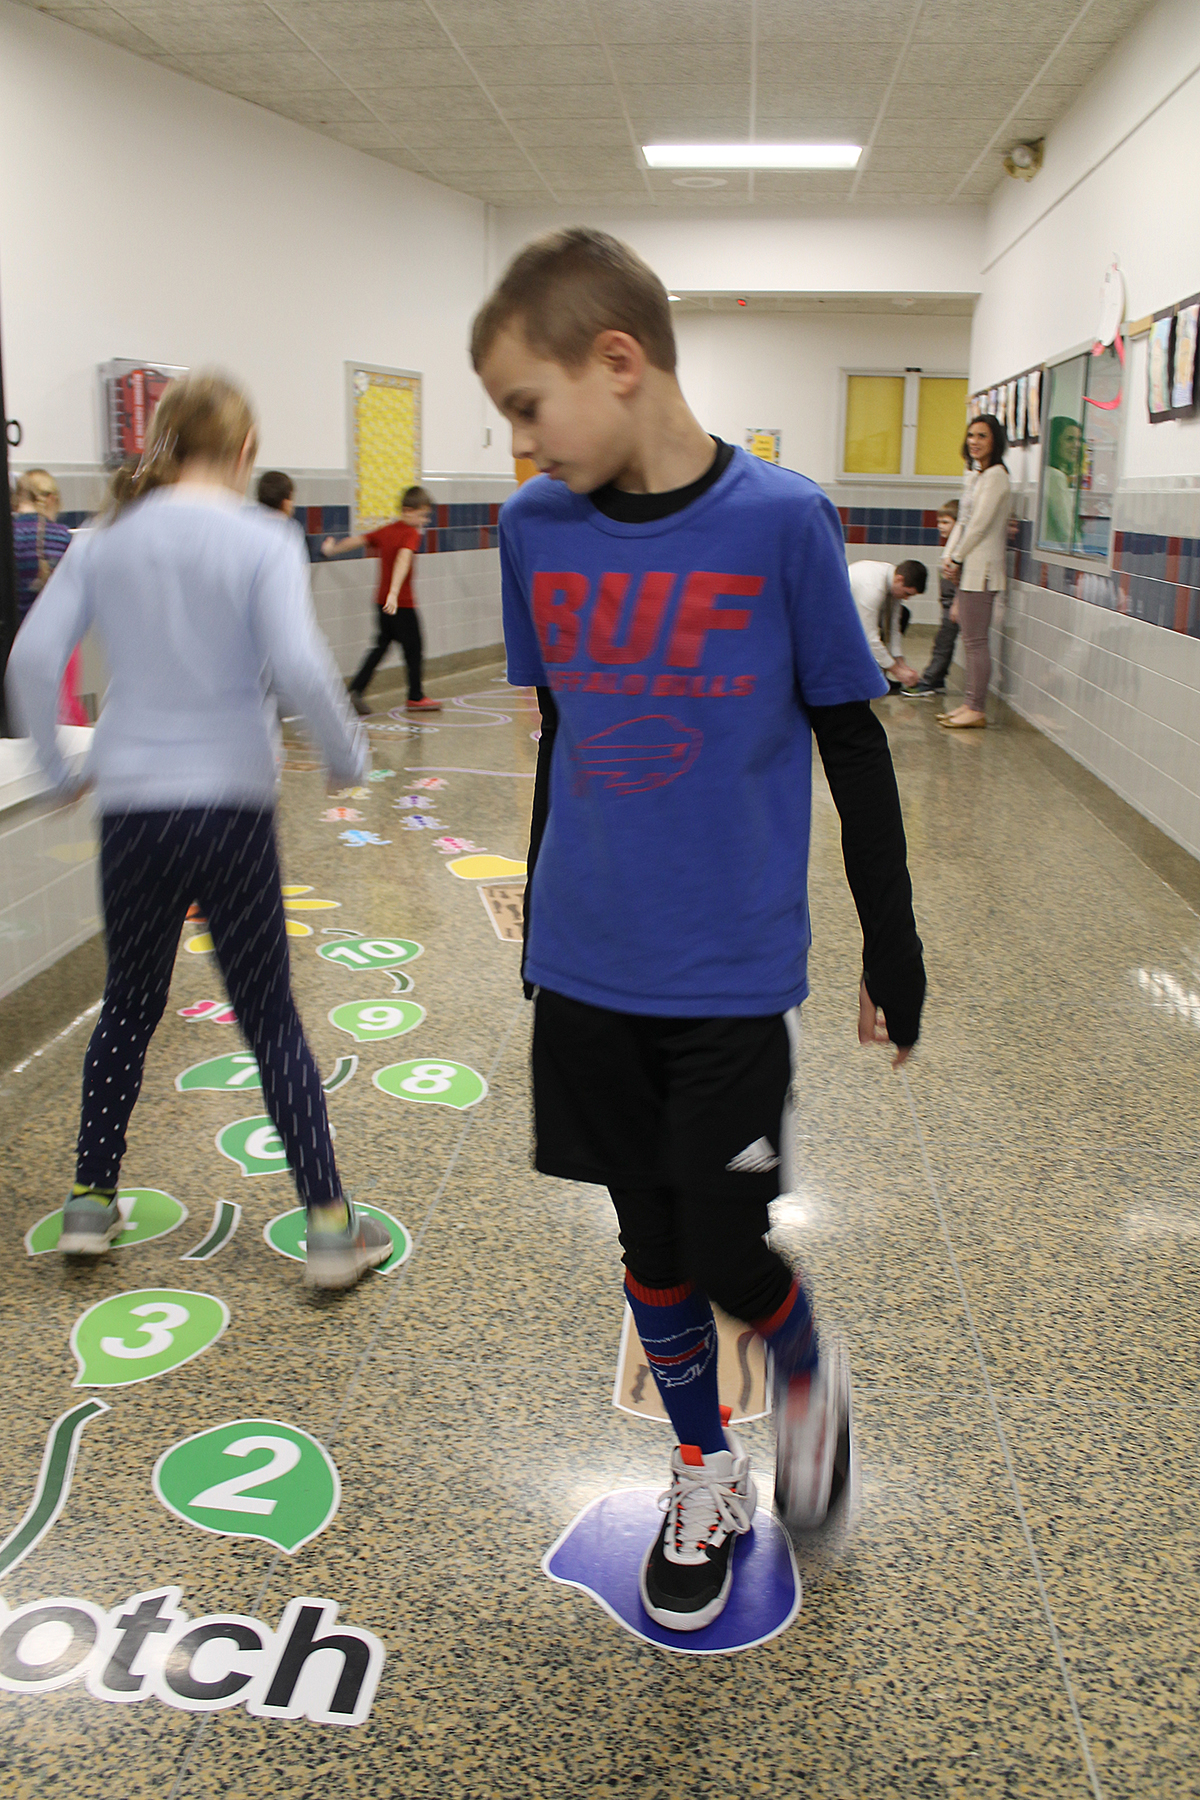 Two students walking on sticker path in hallway.